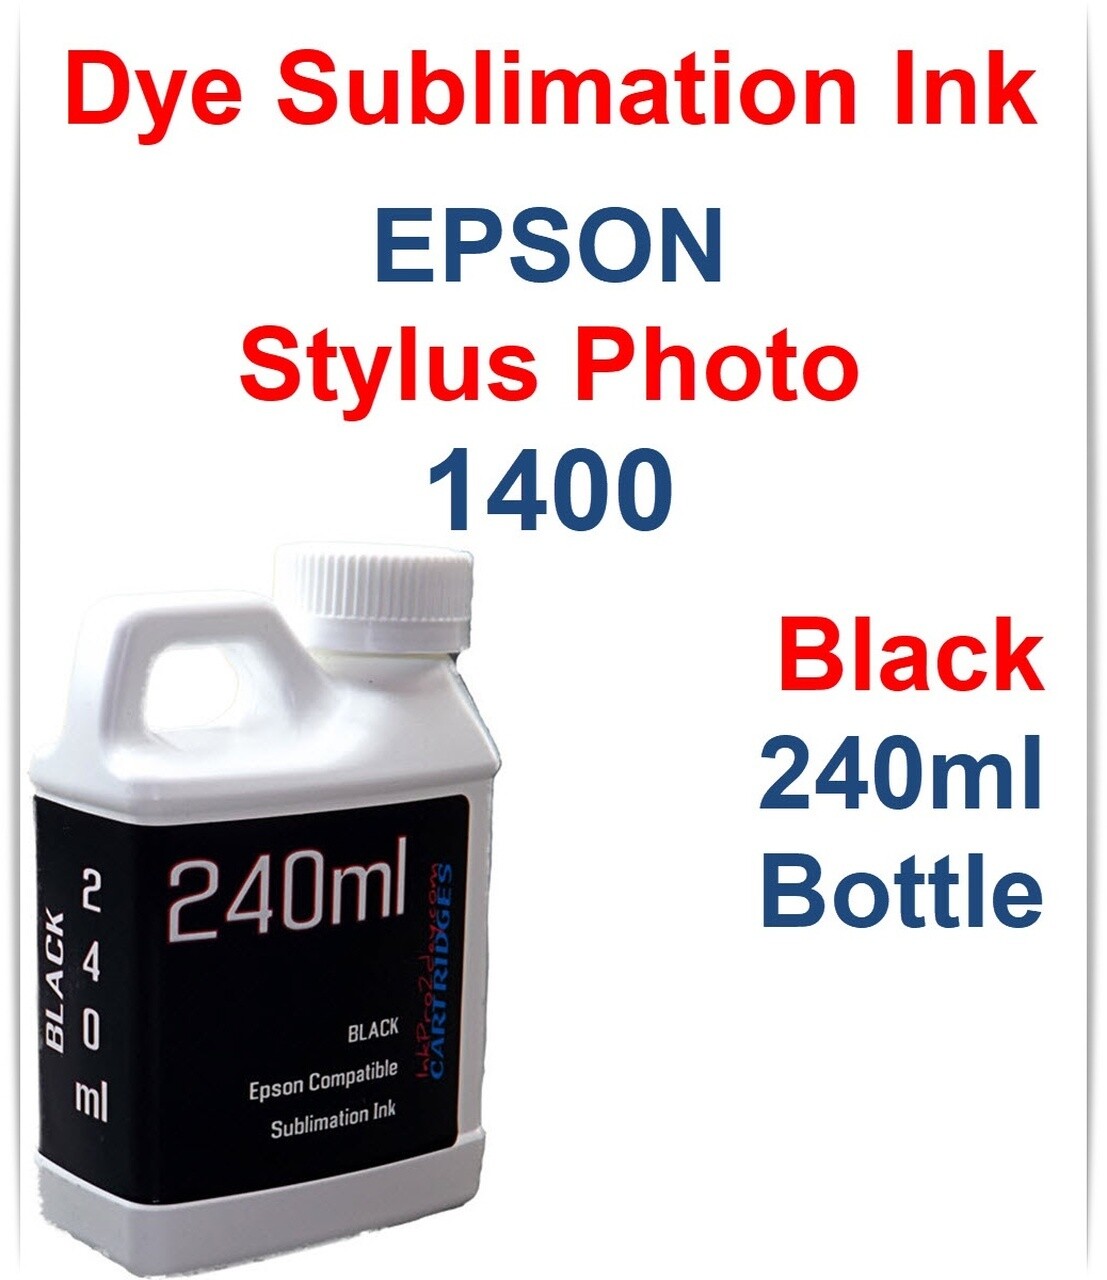 Black Dye Sublimation Ink 240ml bottle for Epson Stylus Photo 1400 Printer